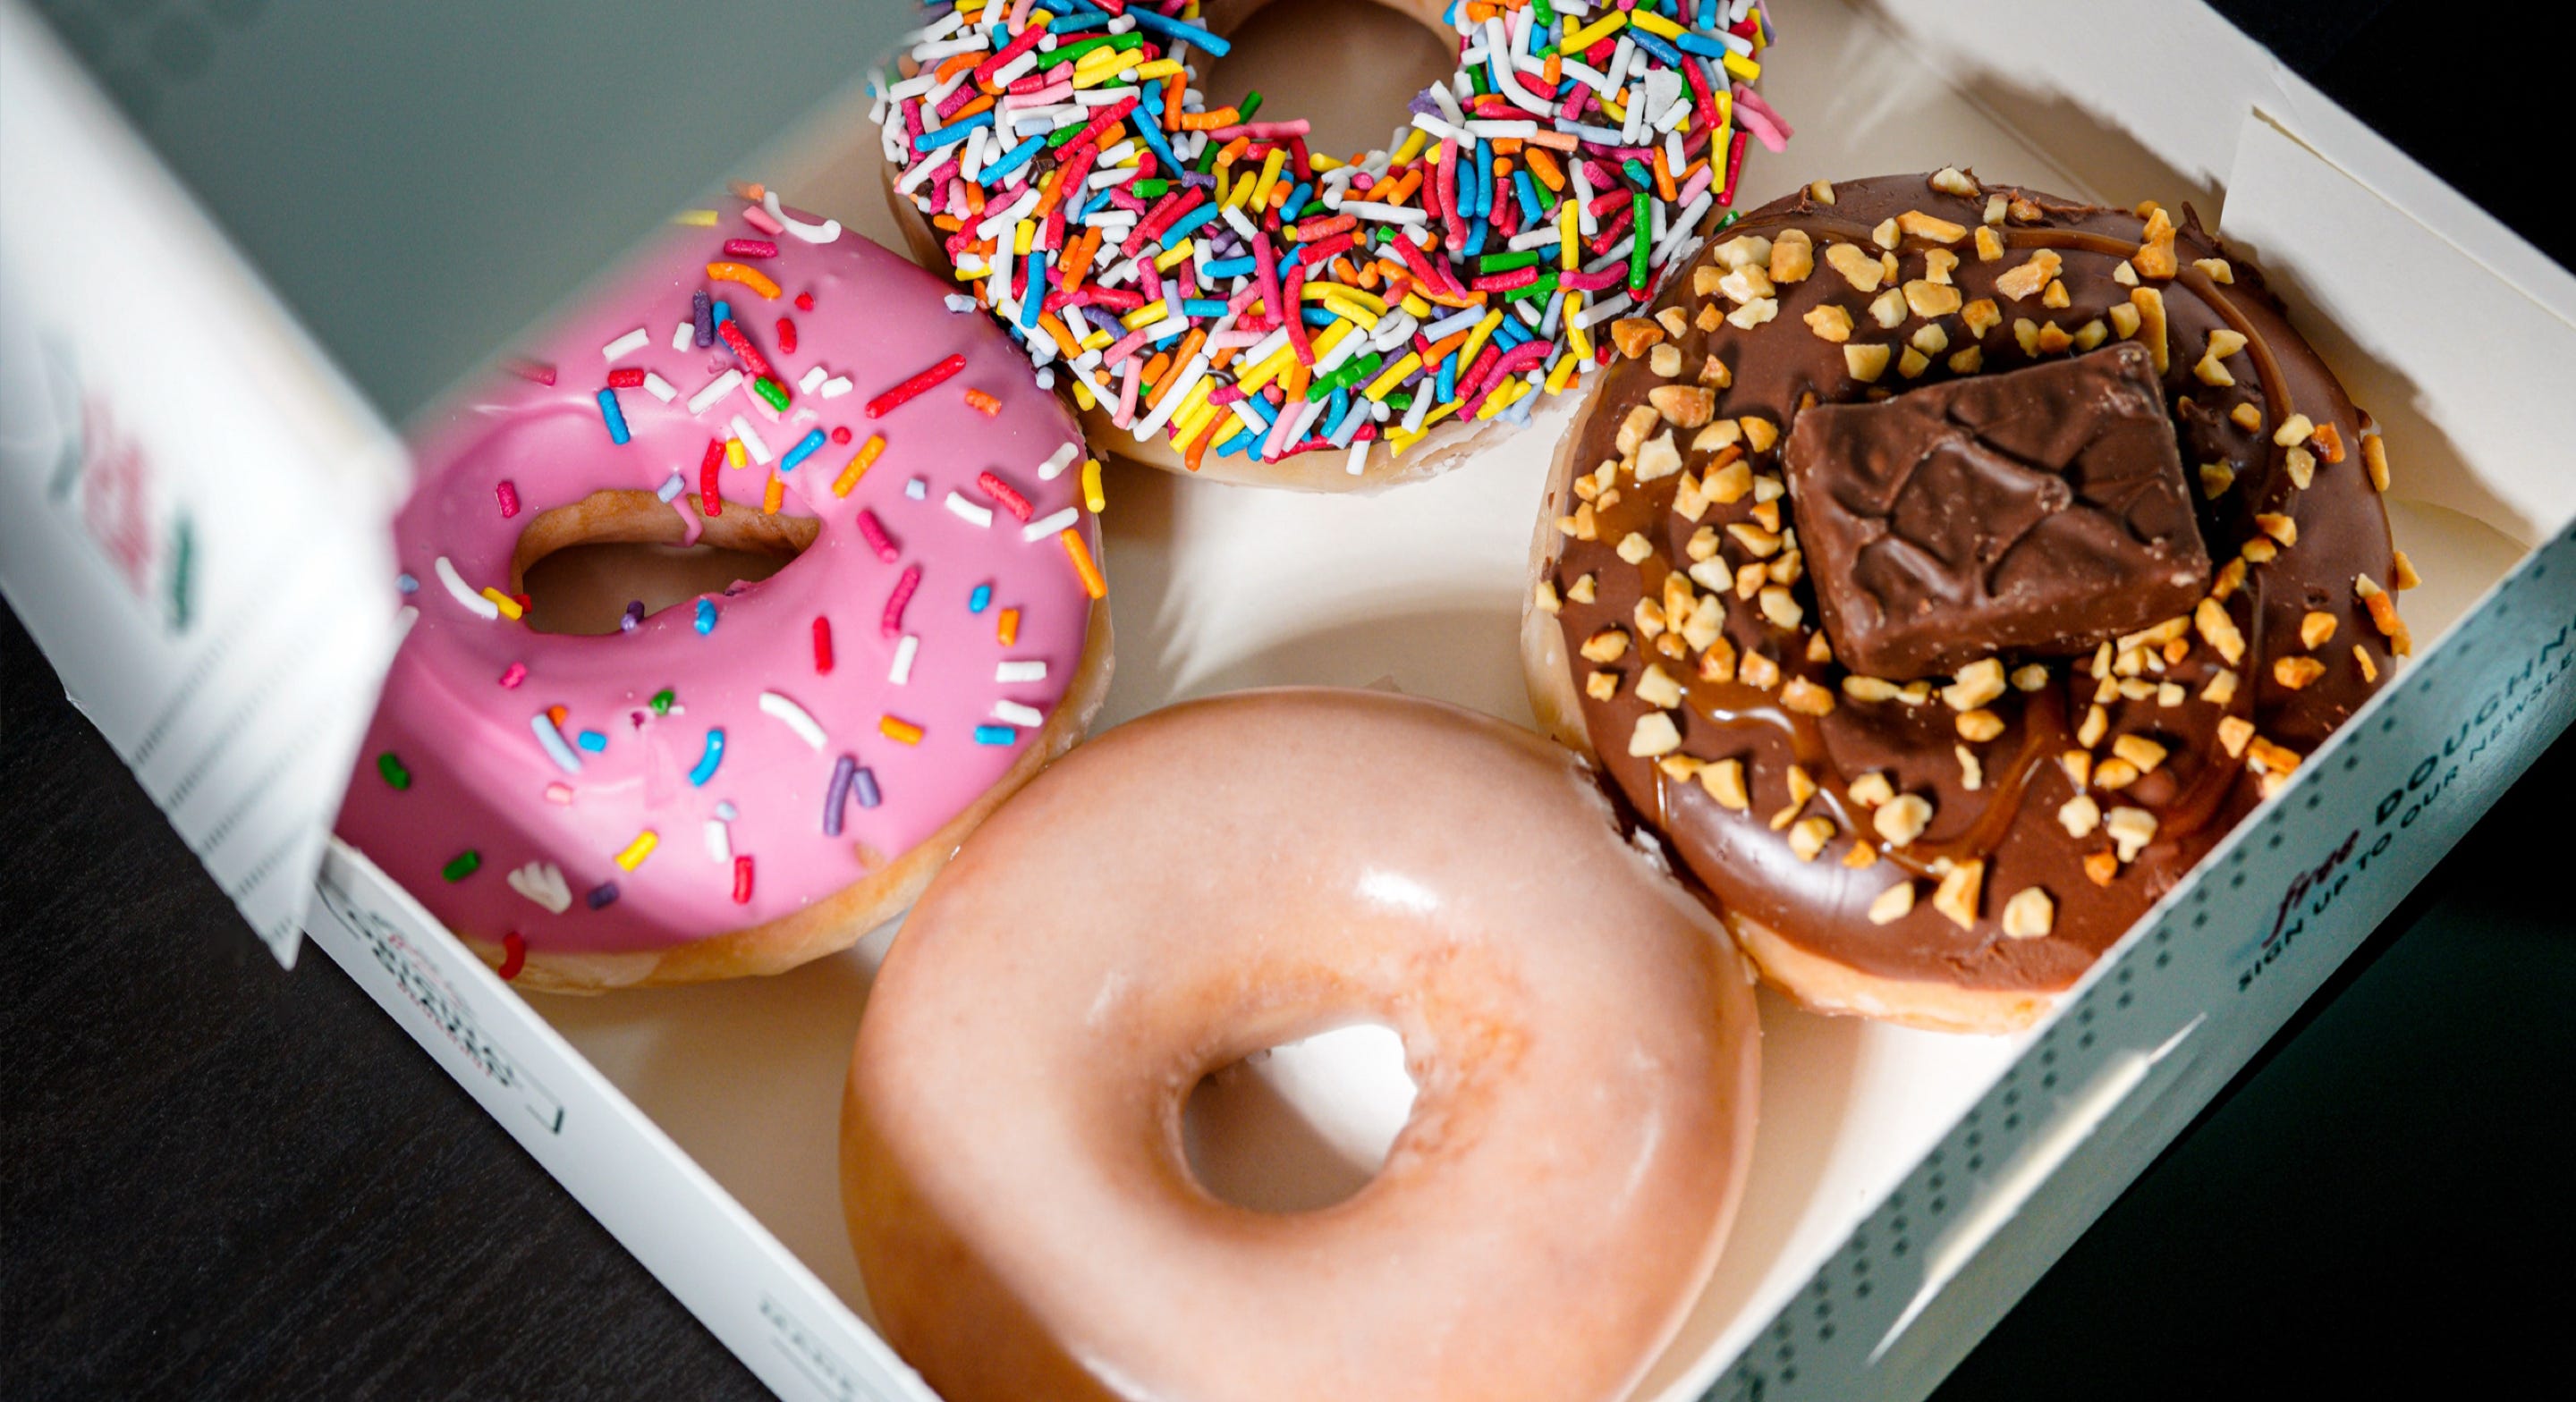 Krispy Kreme box with doughnuts inside